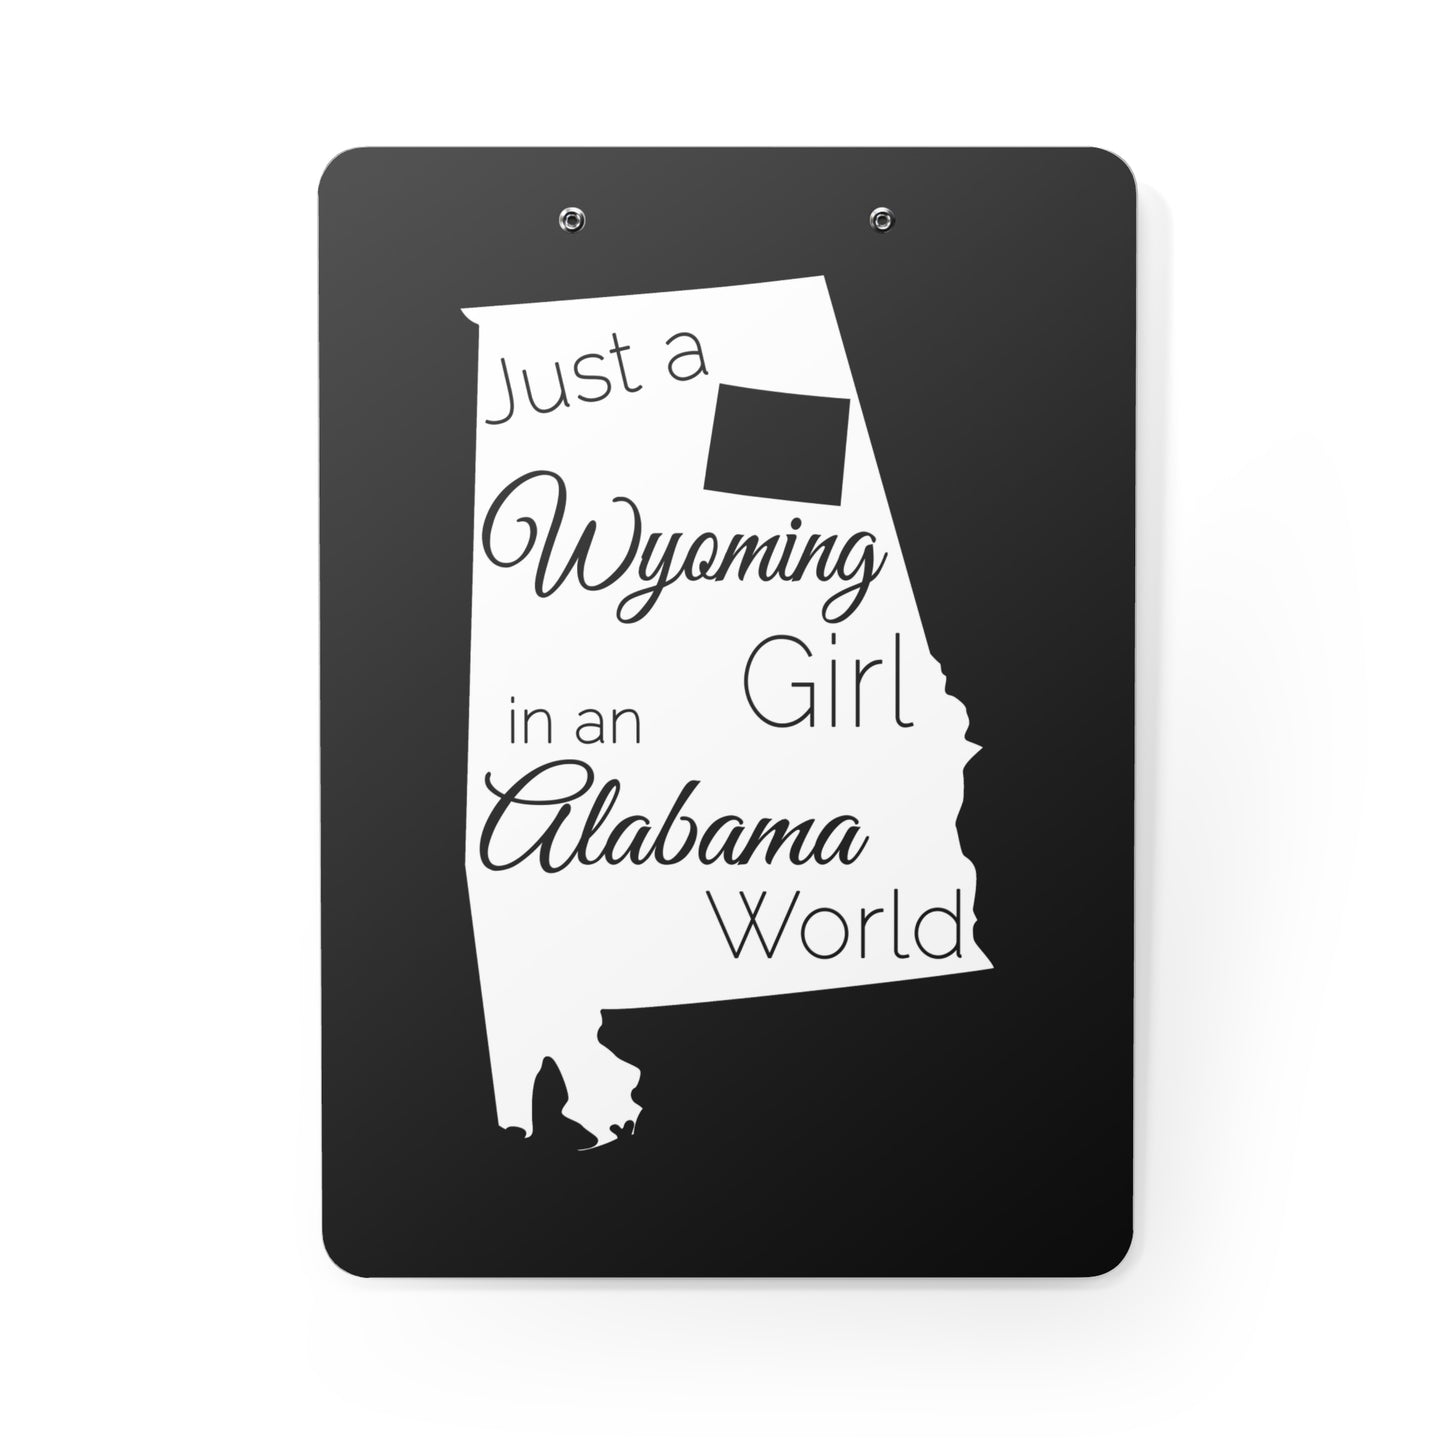 Just a Wyoming Girl in an Alabama World Clipboard